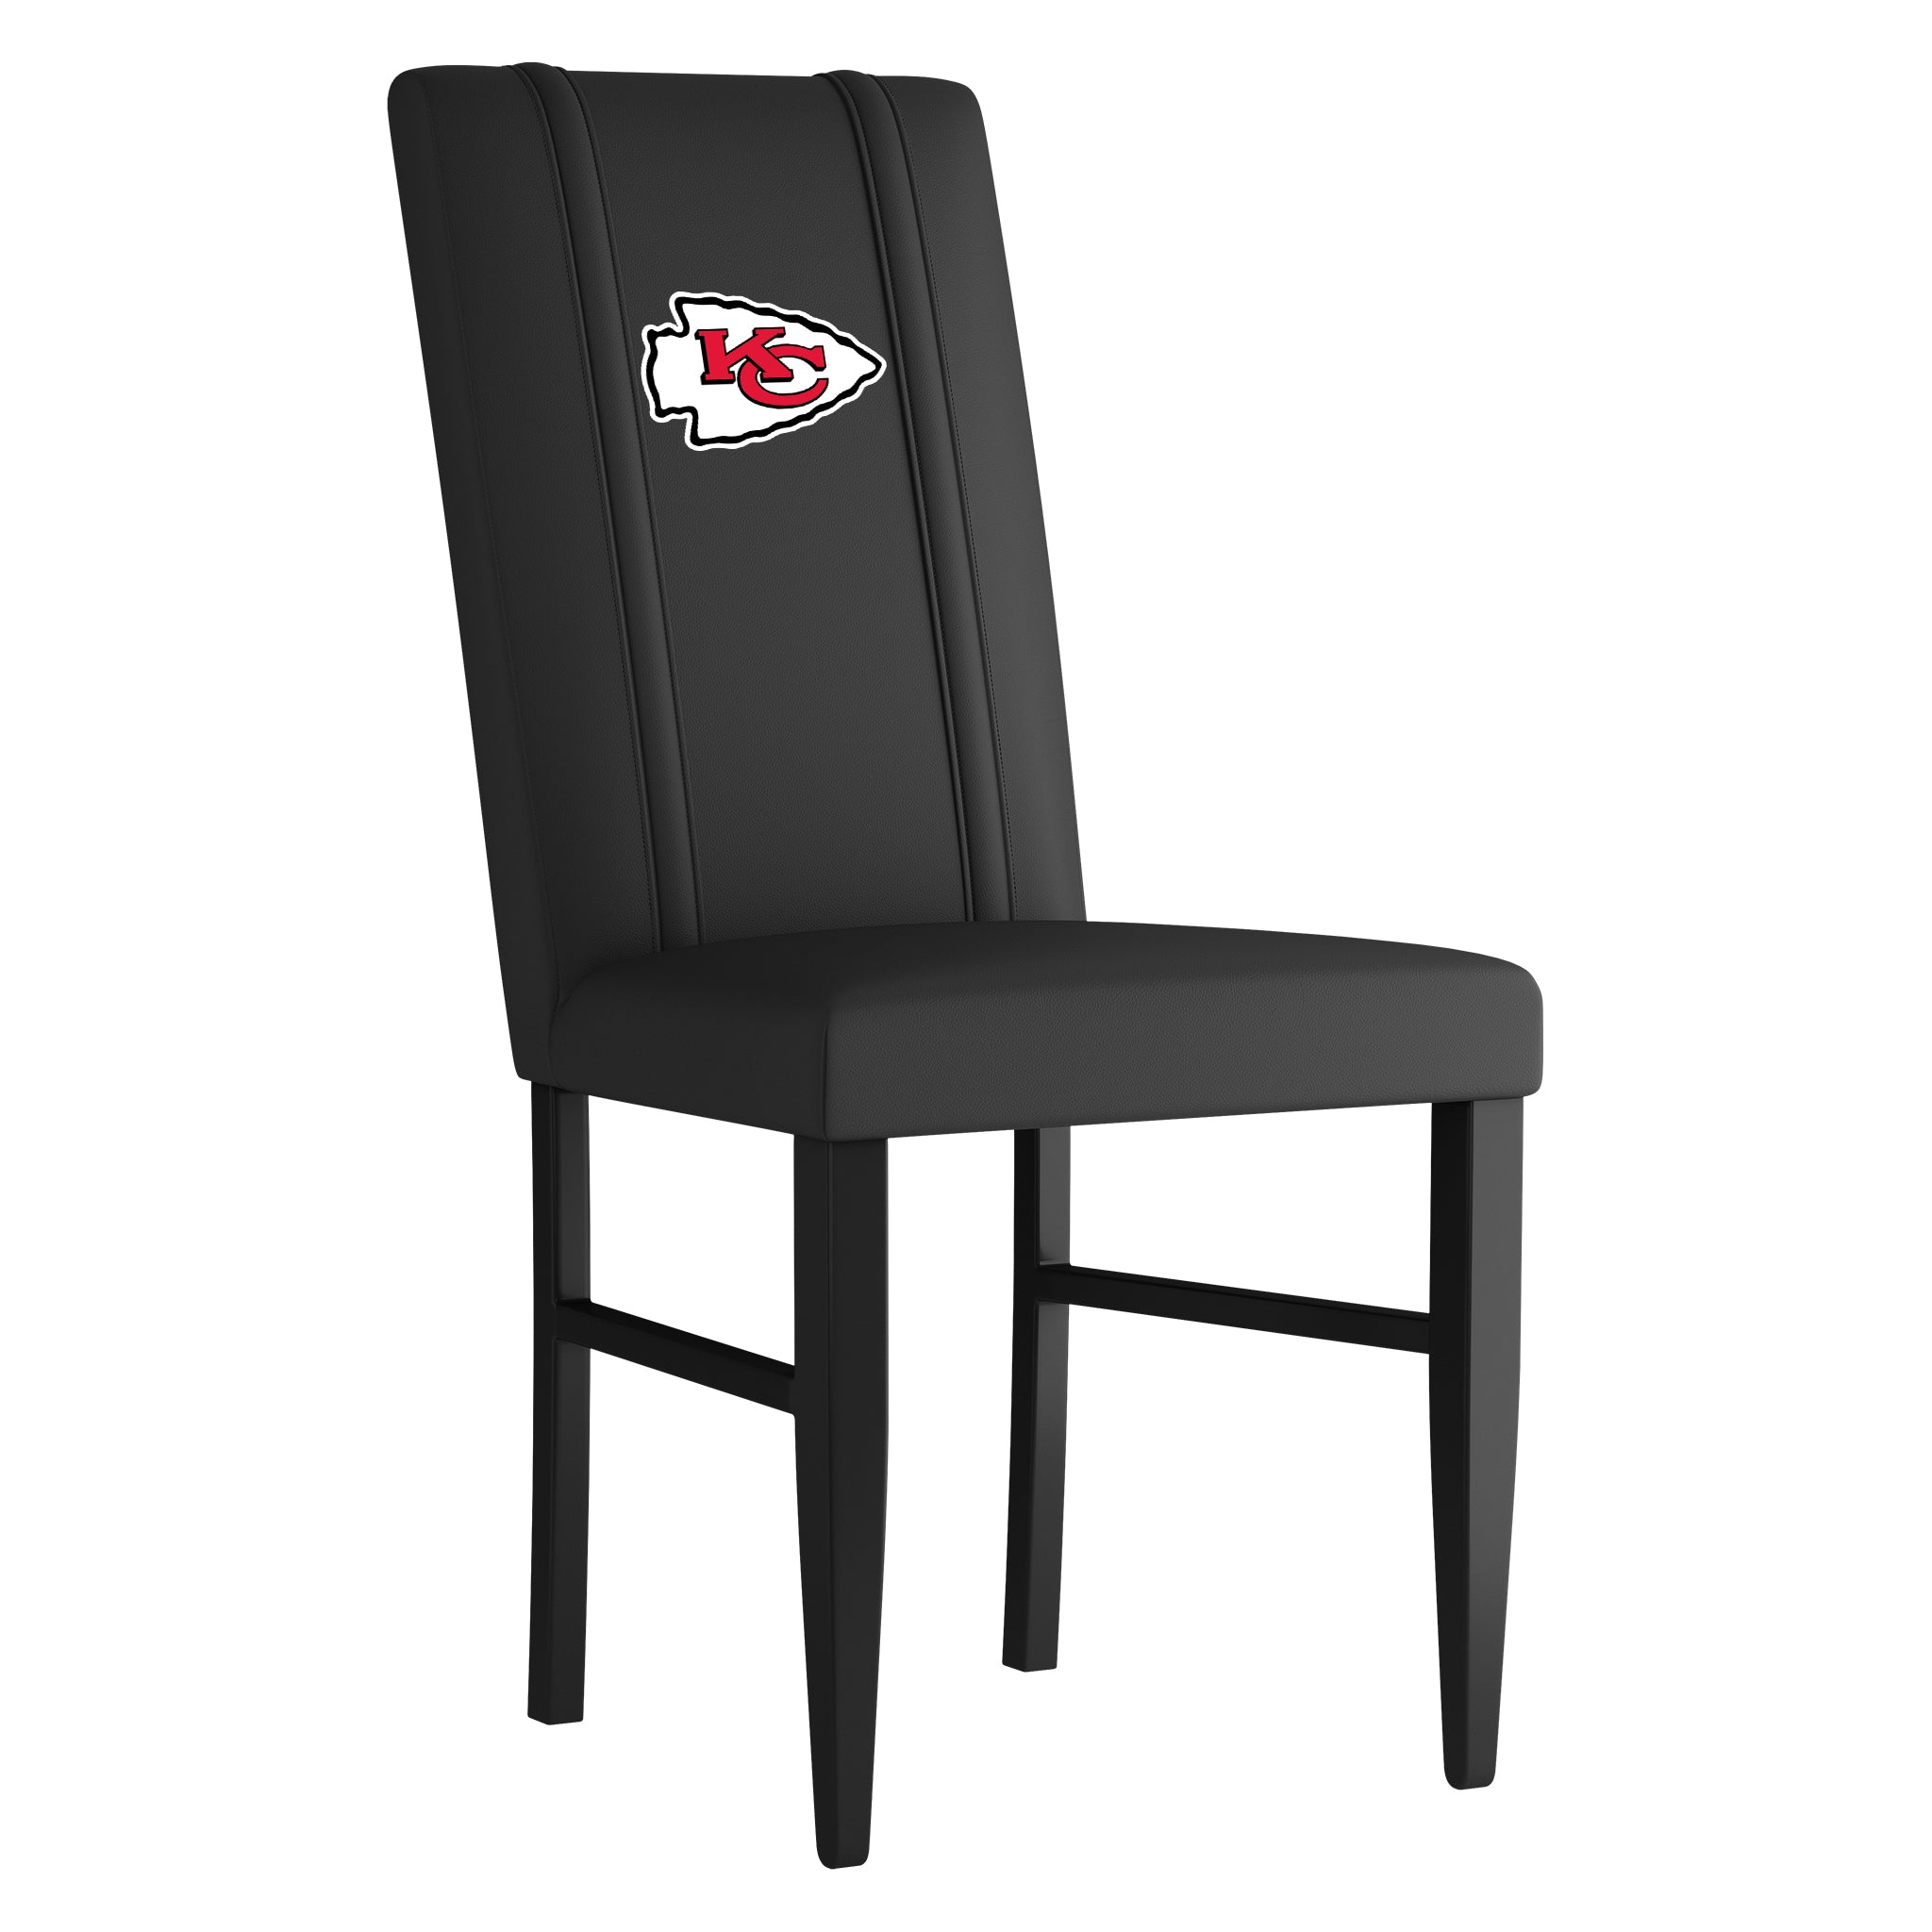 Kansas City Chiefs Side Chair 2000